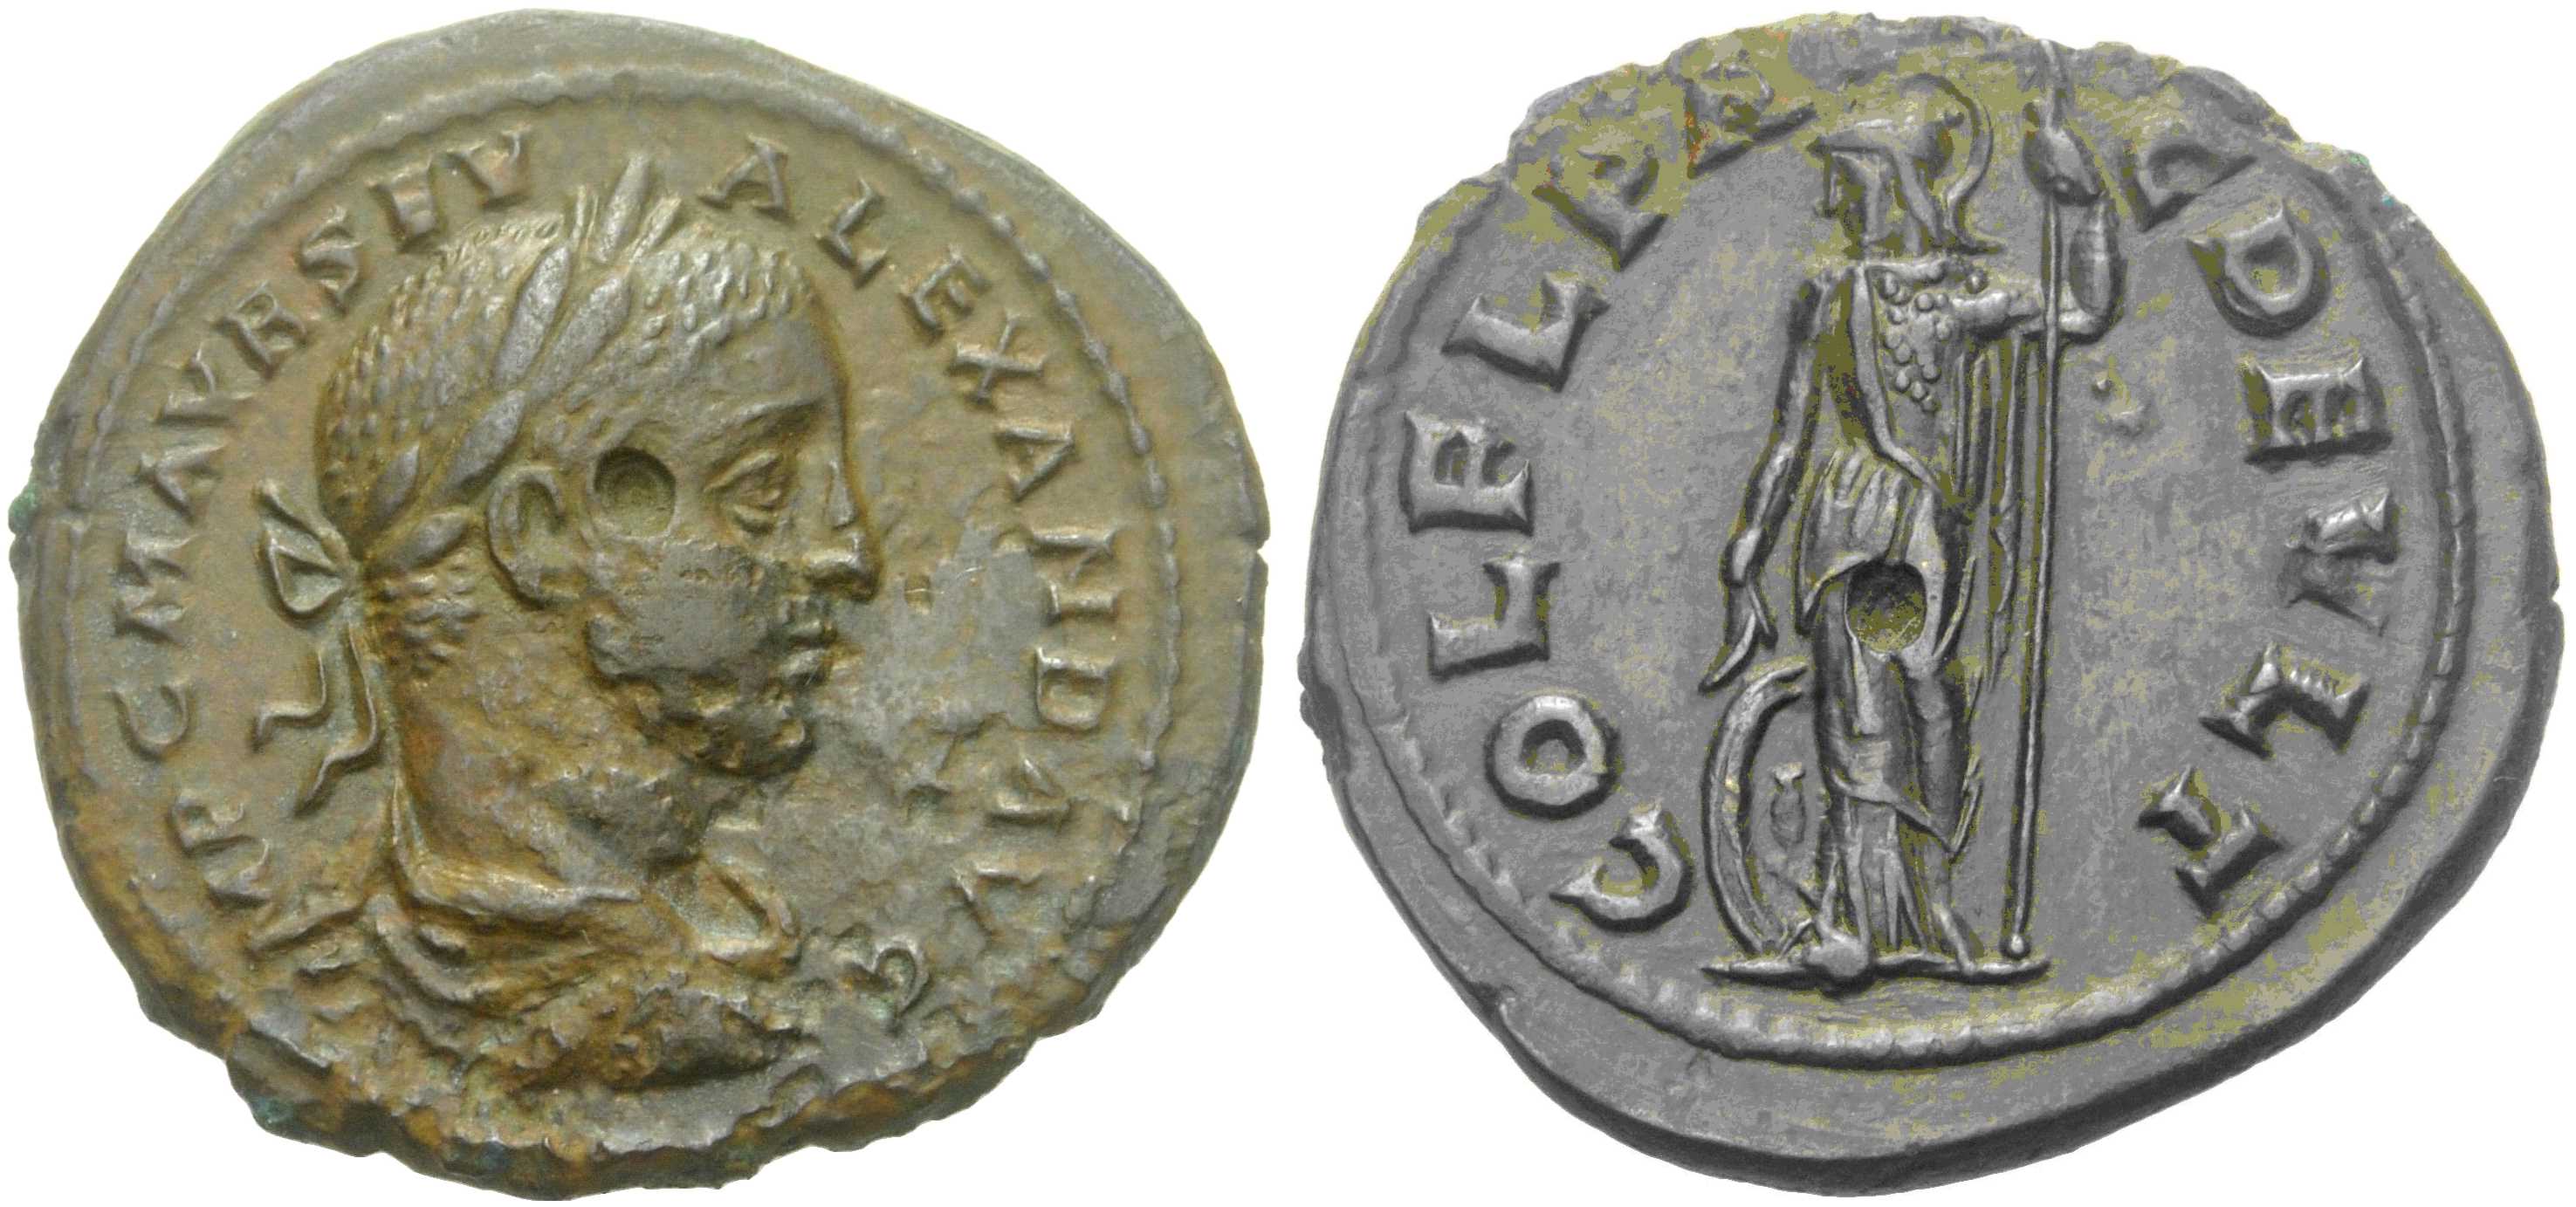 5560 Deultum Thracia Severus Alexander AE